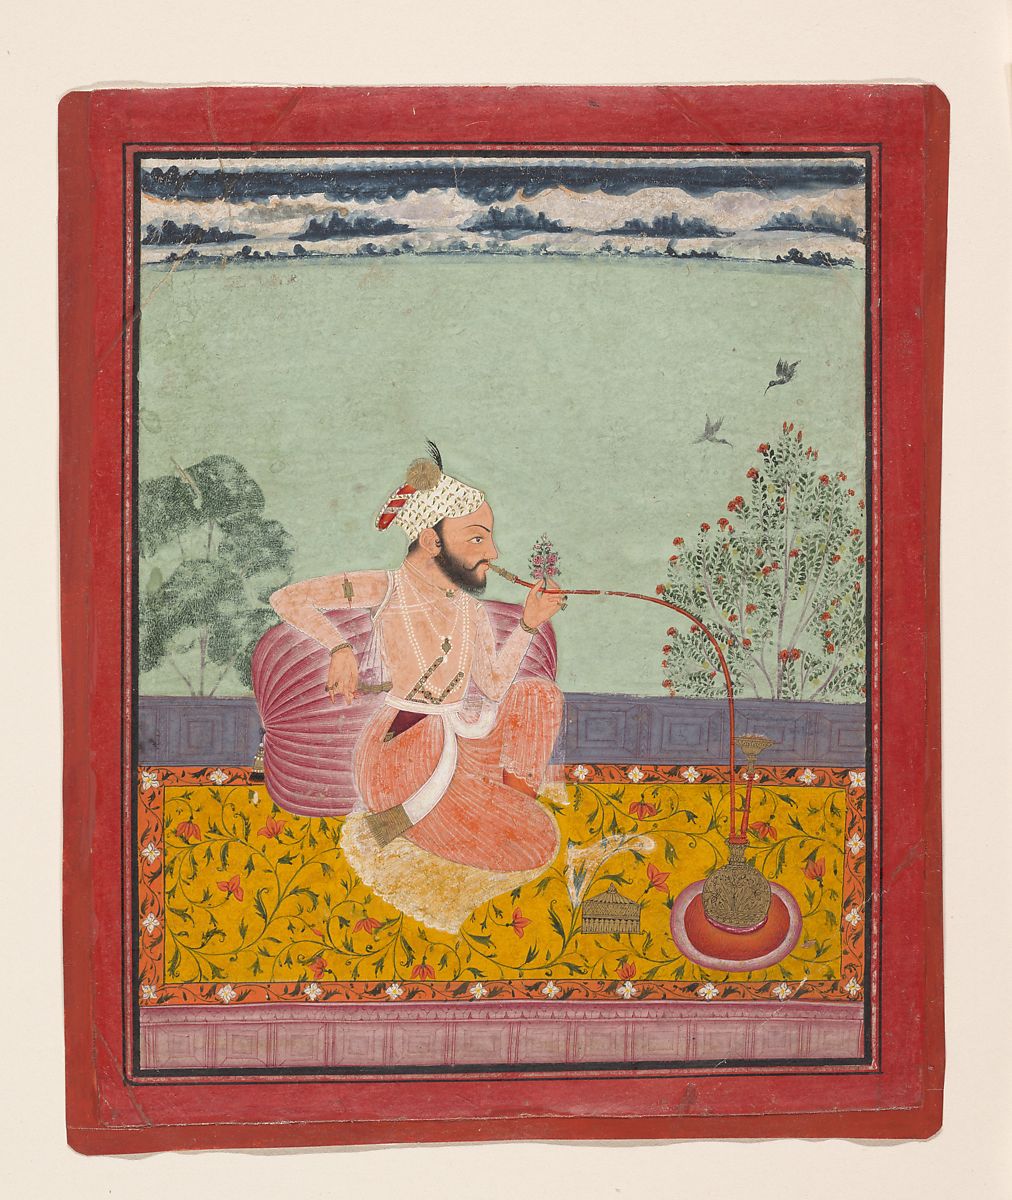 A man using a hookah on a yellow carpet